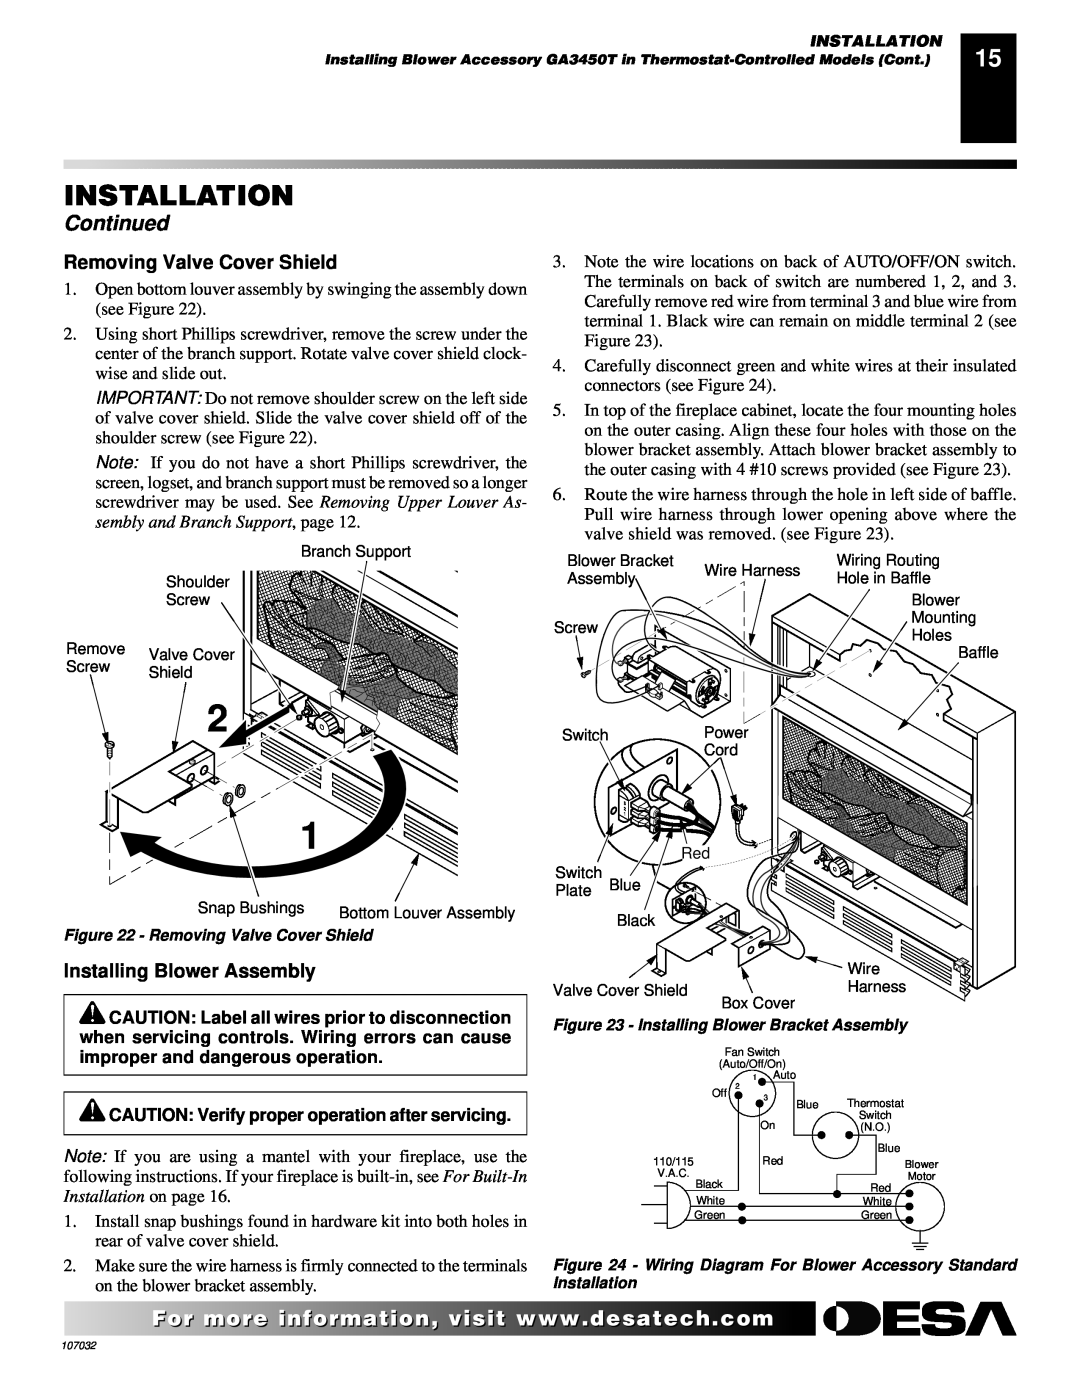 Desa VMH10TPB installation manual Removing Valve Cover Shield, Installing Blower Assembly, Installation, Continued 